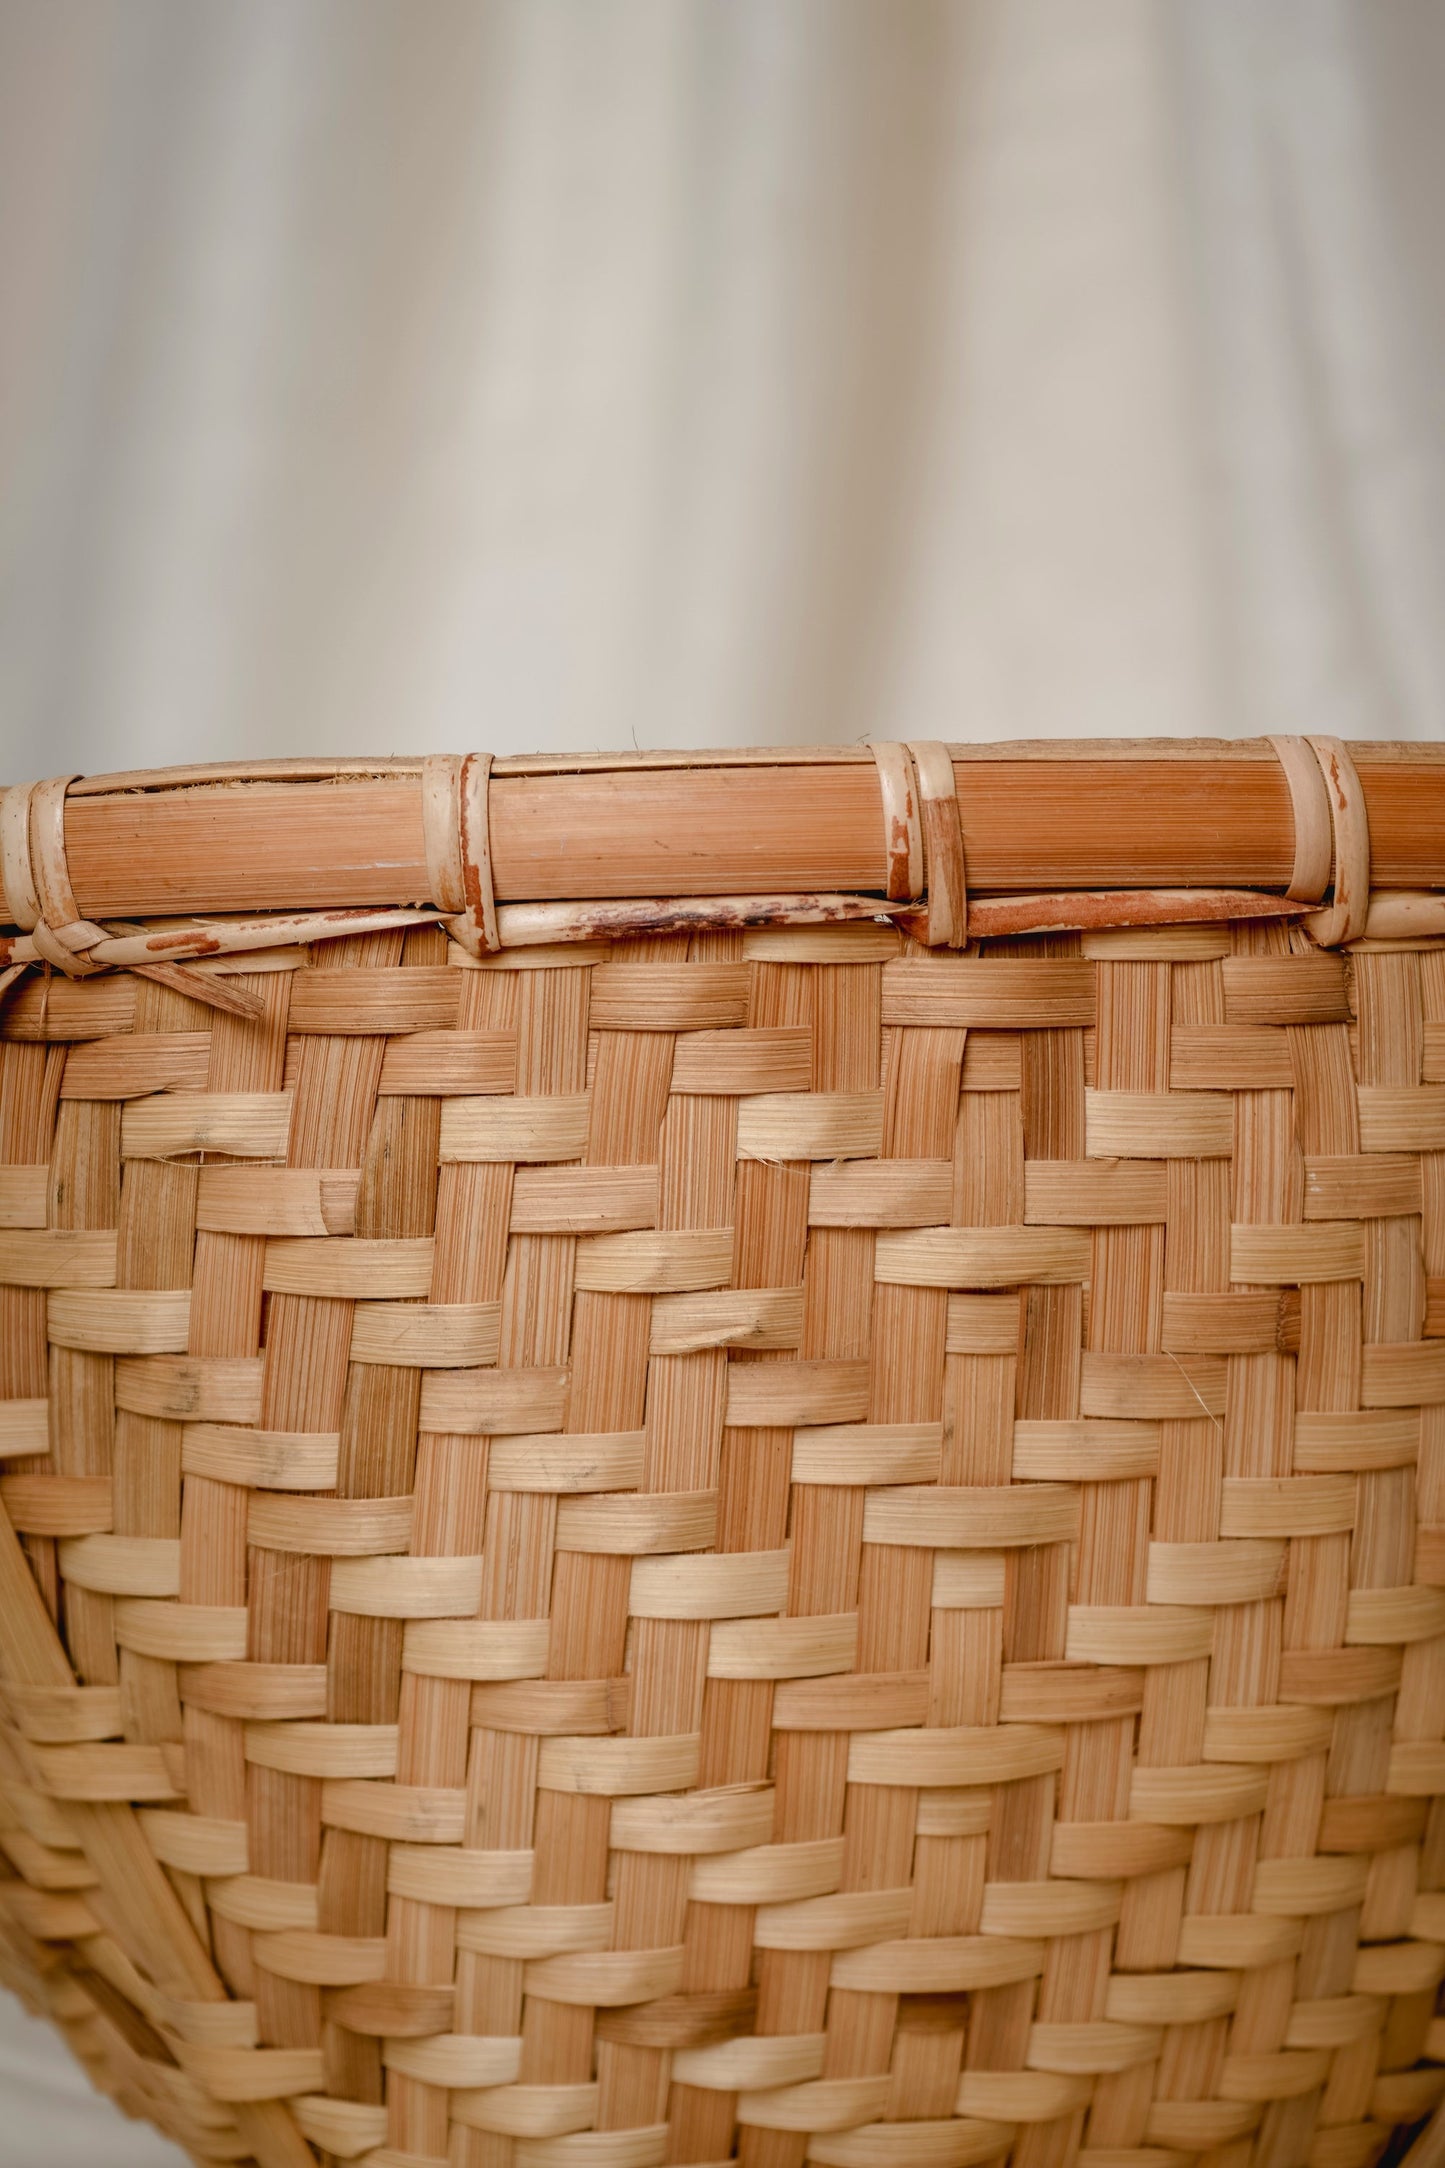 Wicker Handwoven Circular Bamboo Basket